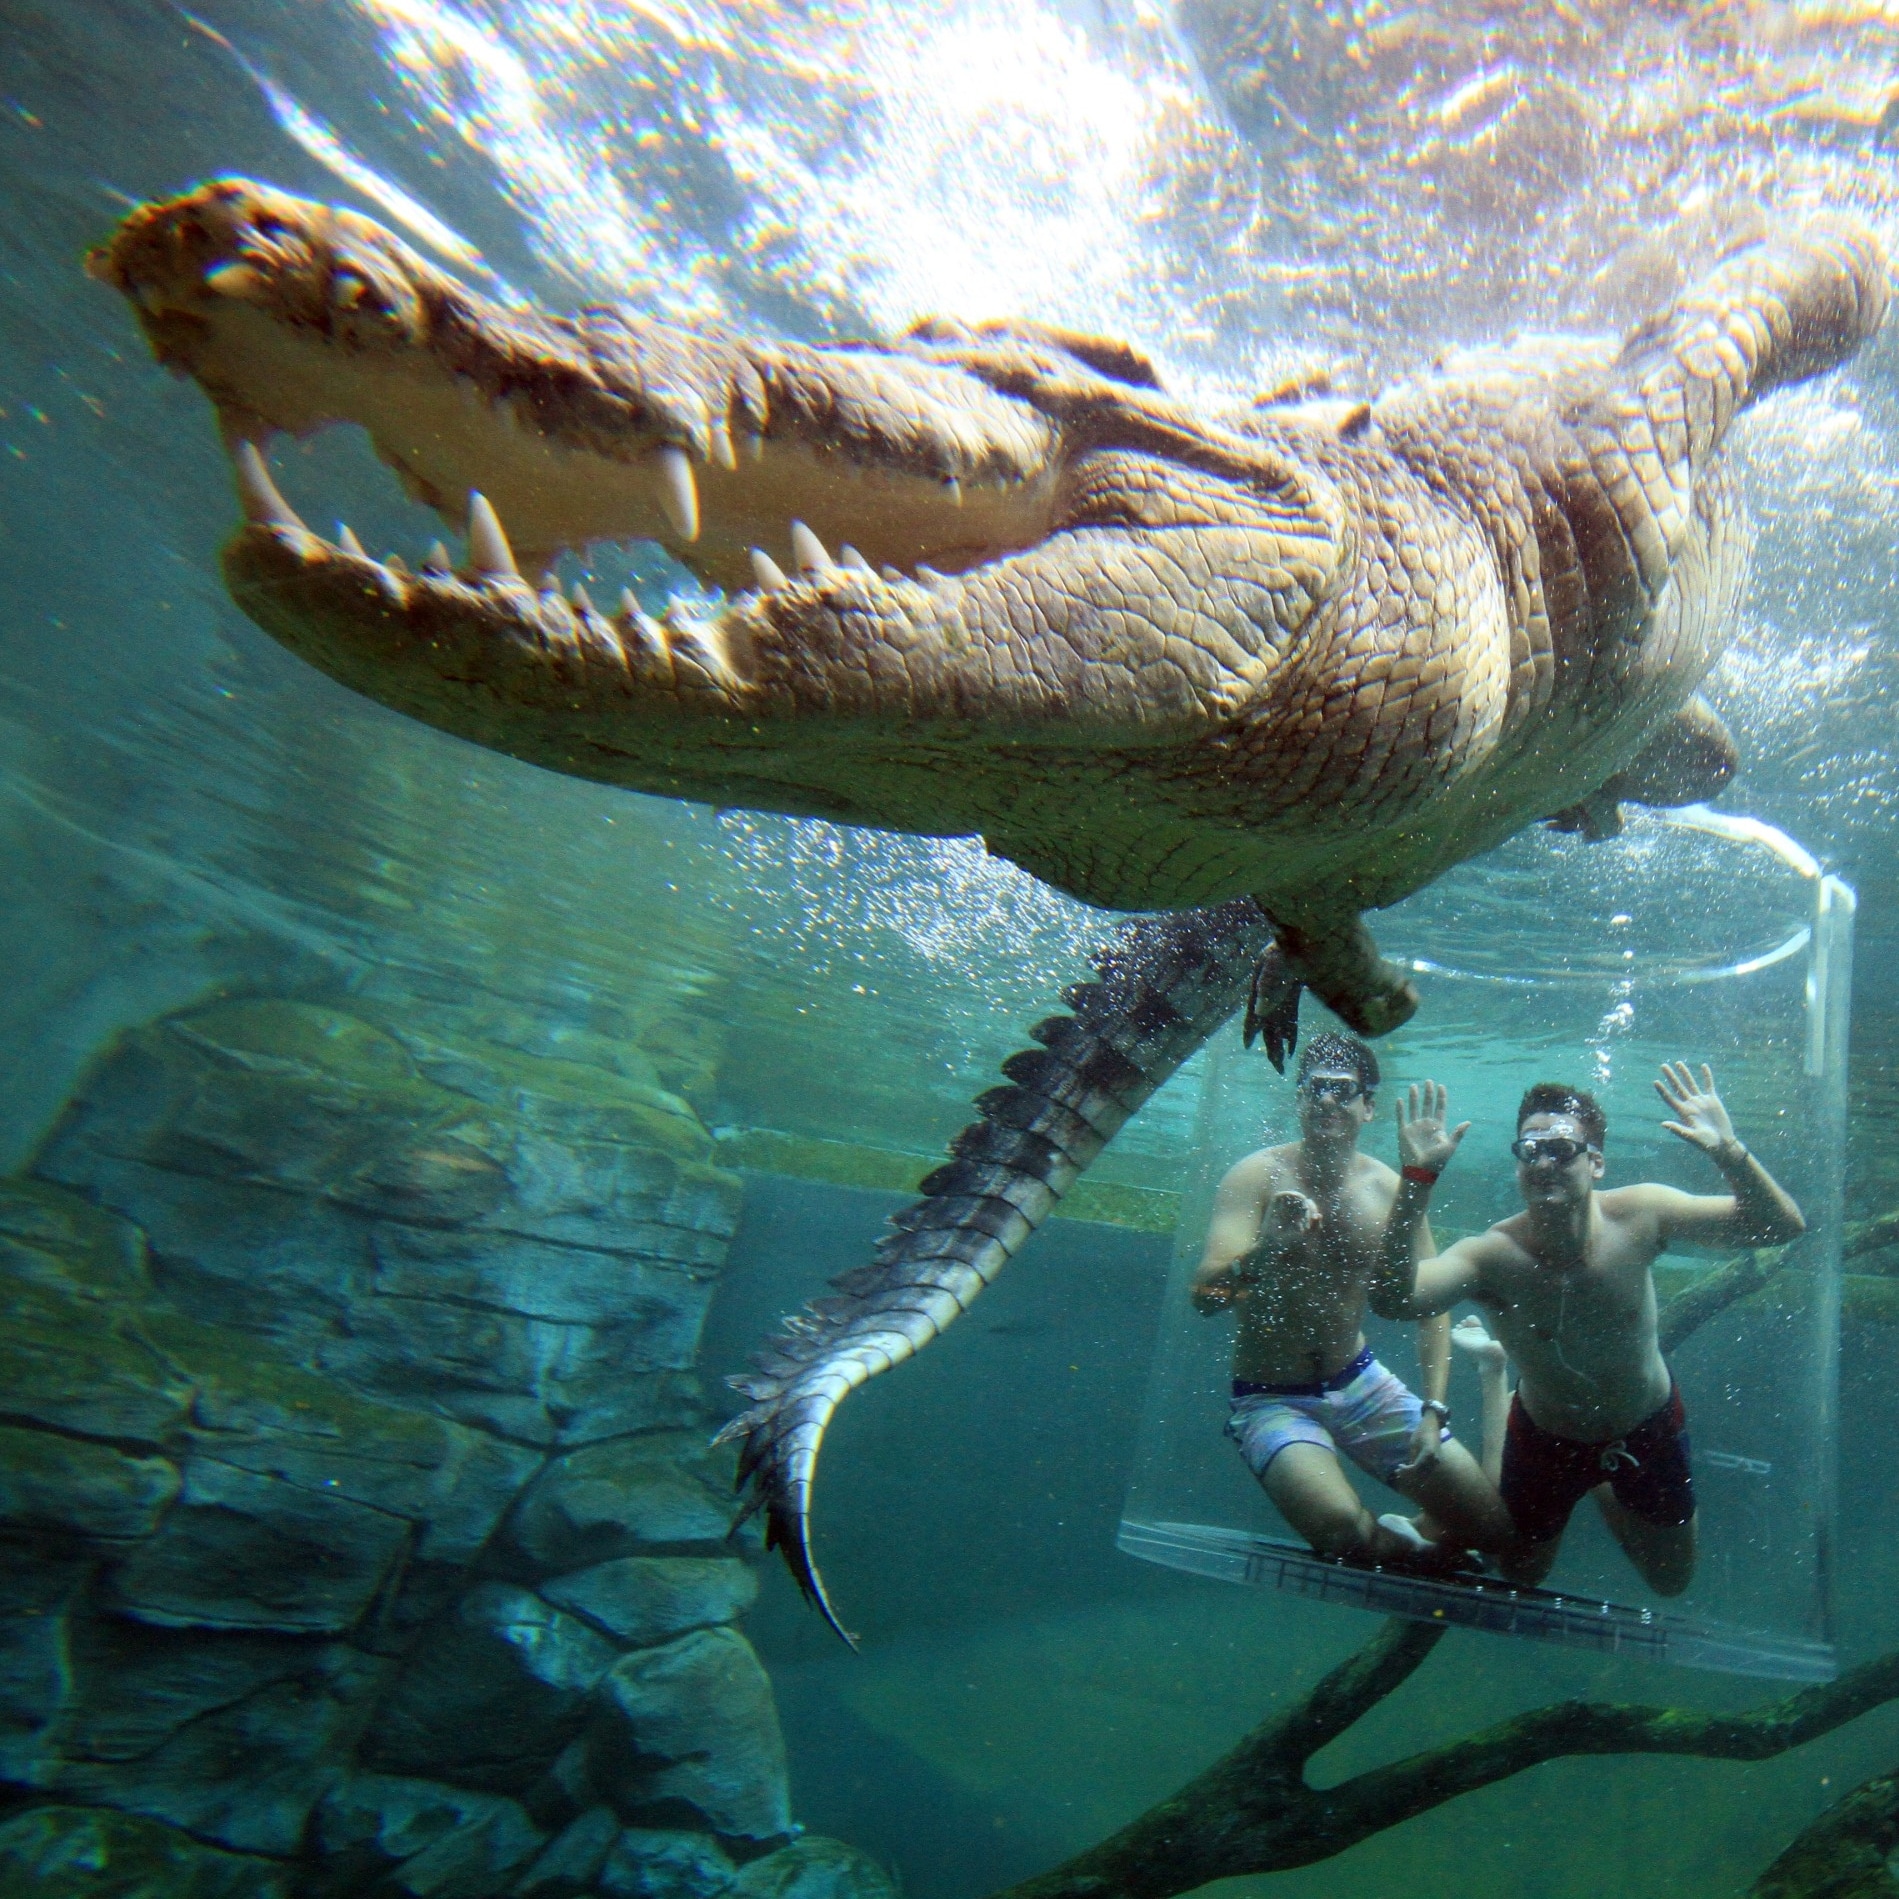 Visiteurs plongeant dans la Cage de la mort avec un crocodile marin à Crocosaurus Cove © Tourism NT/Shaana McNaught